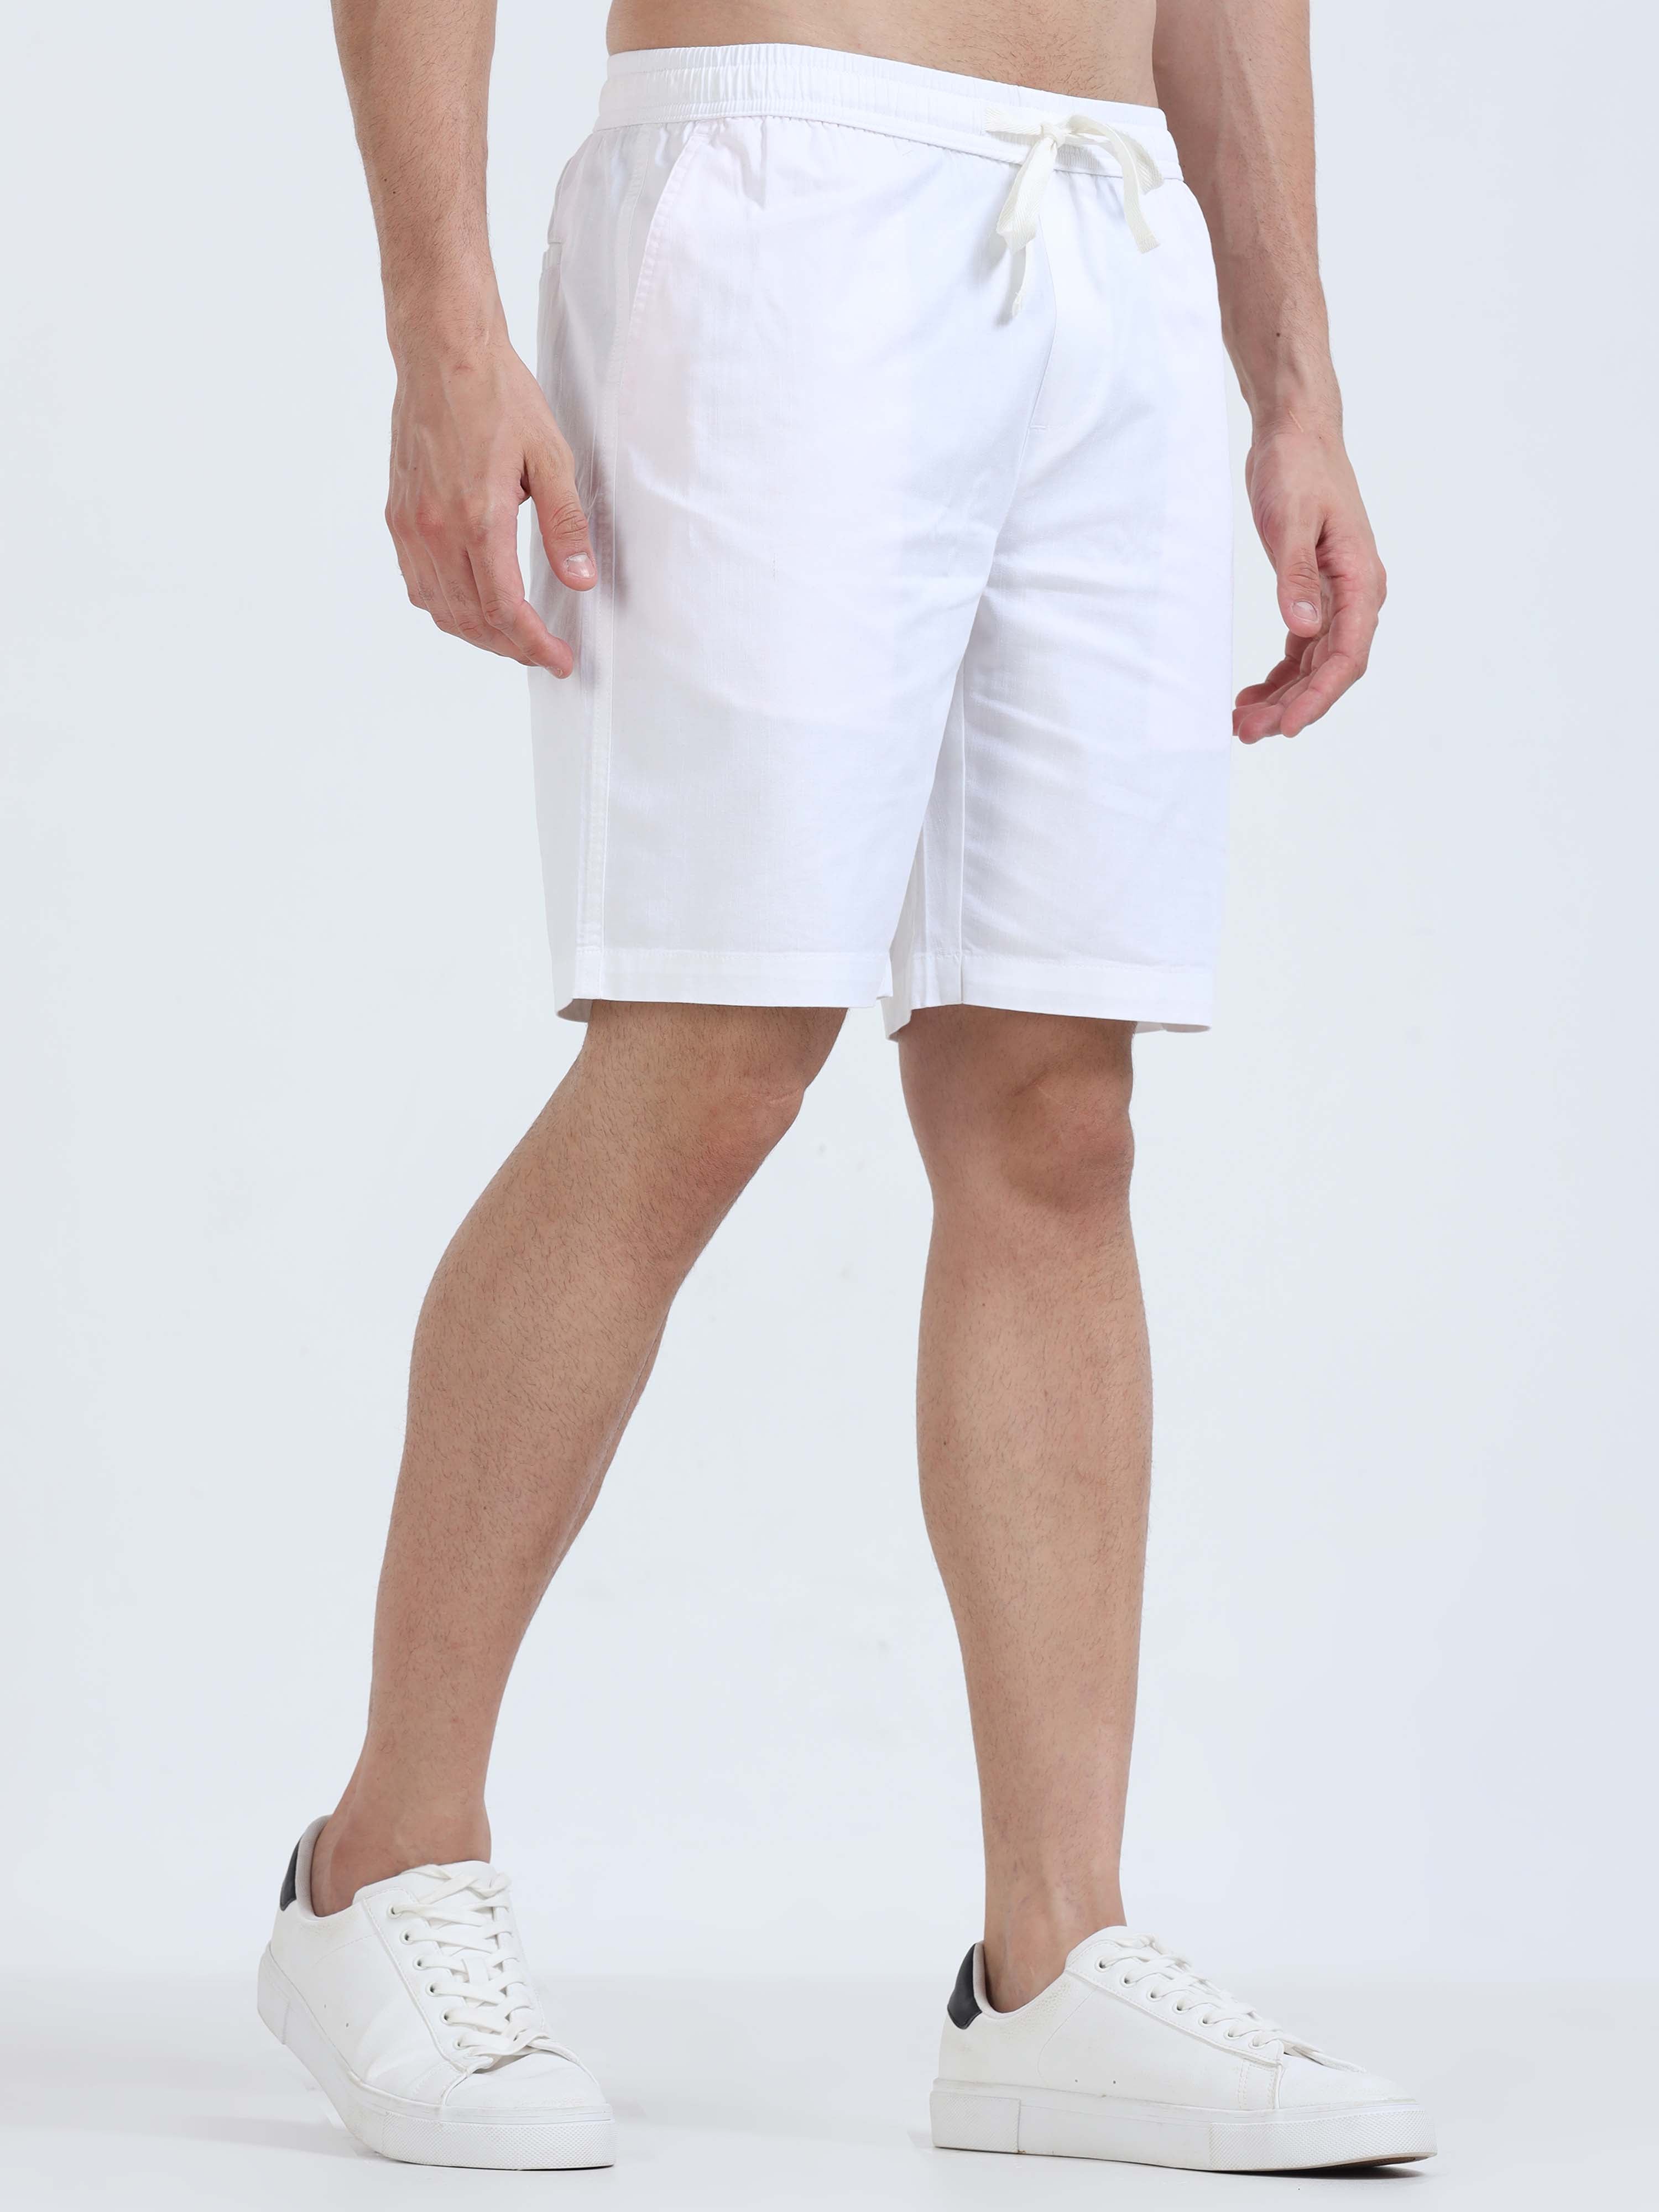 Soft Cotton White Basic Shorts